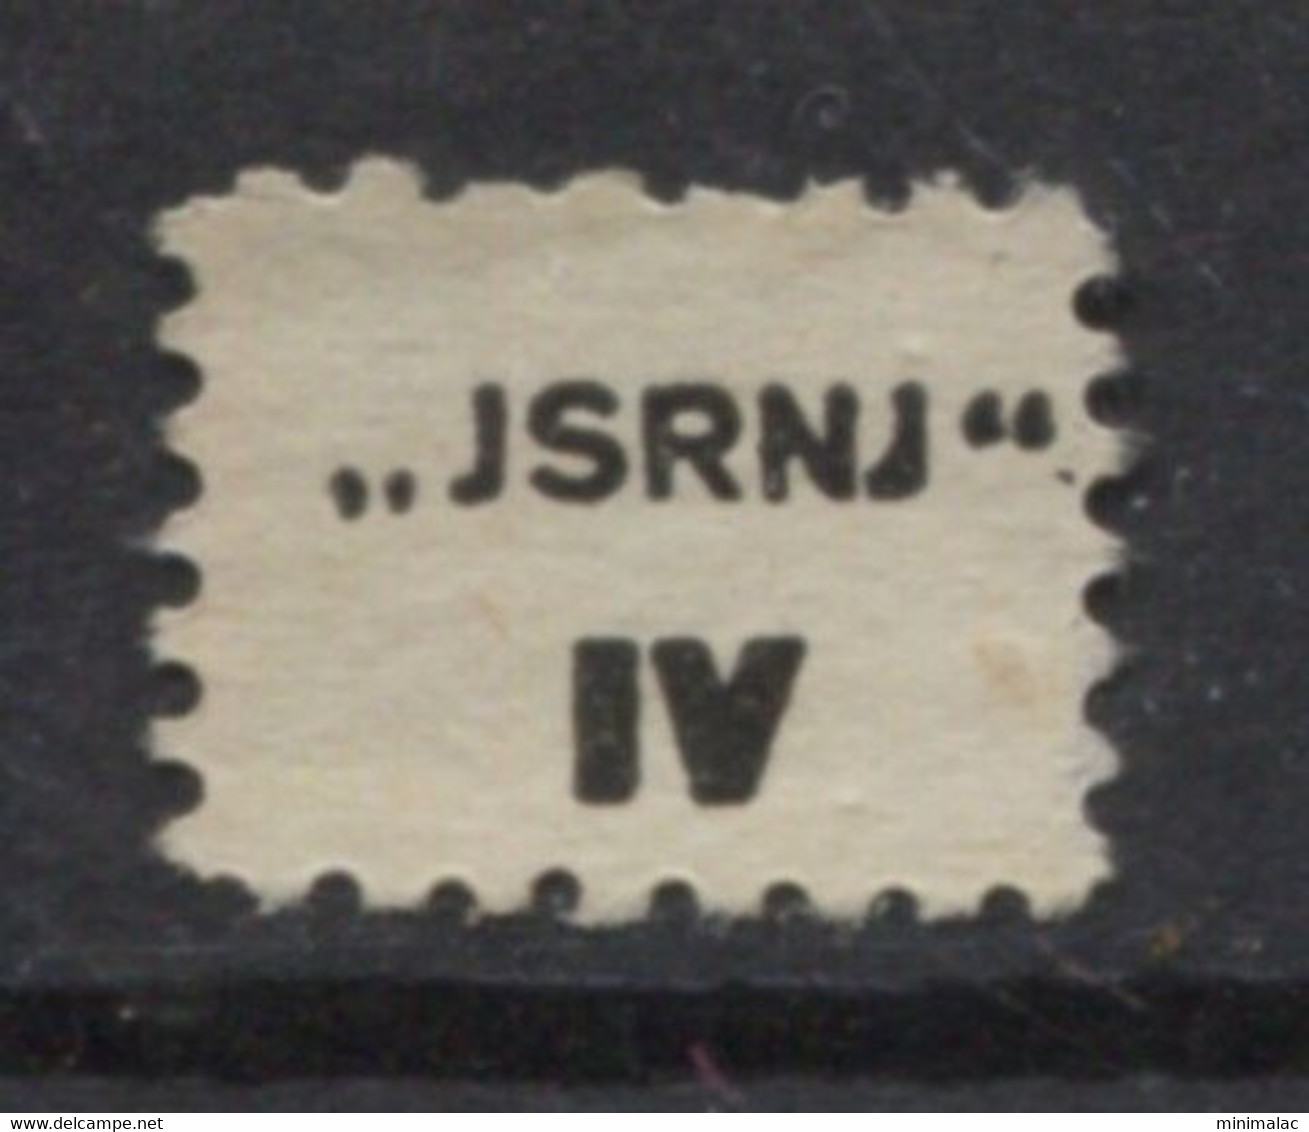 Yugoslavia 1947, Stamp For Membership, JSRNJ, Labor Union, Administrative Stamp - Revenue, Tax Stamp, IV - Service